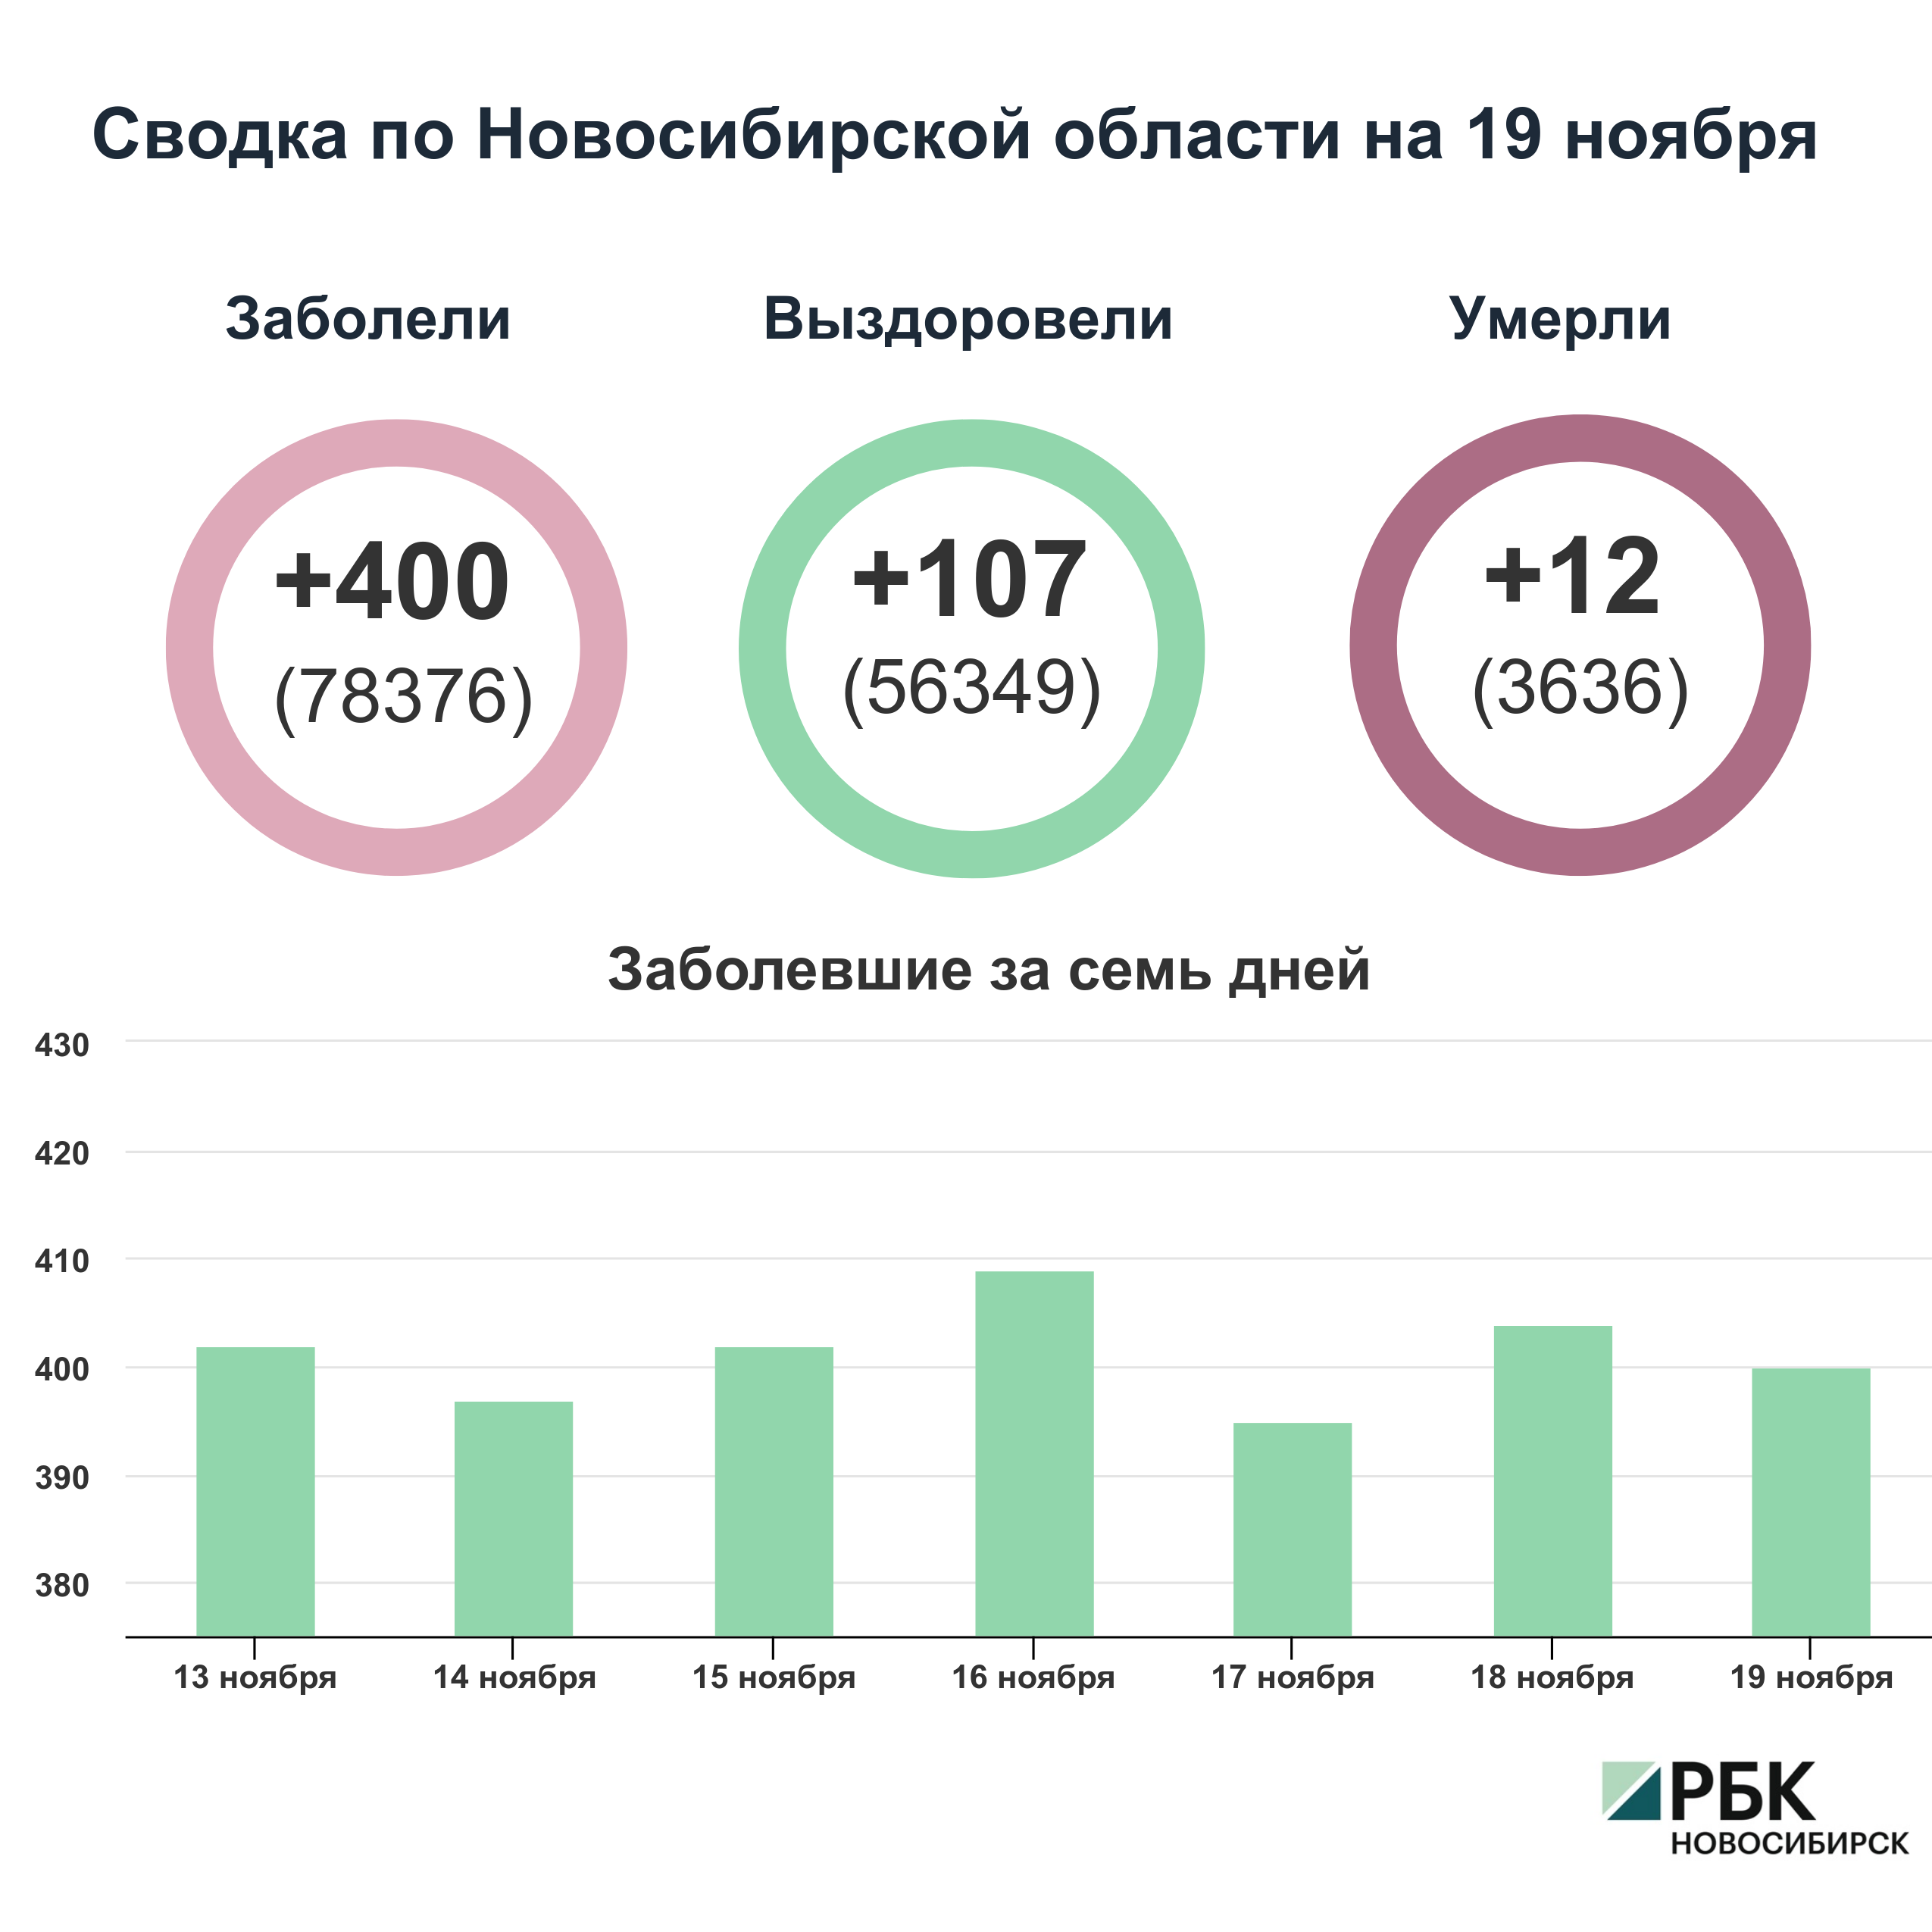 Коронавирус в Новосибирске: сводка на 19 ноября